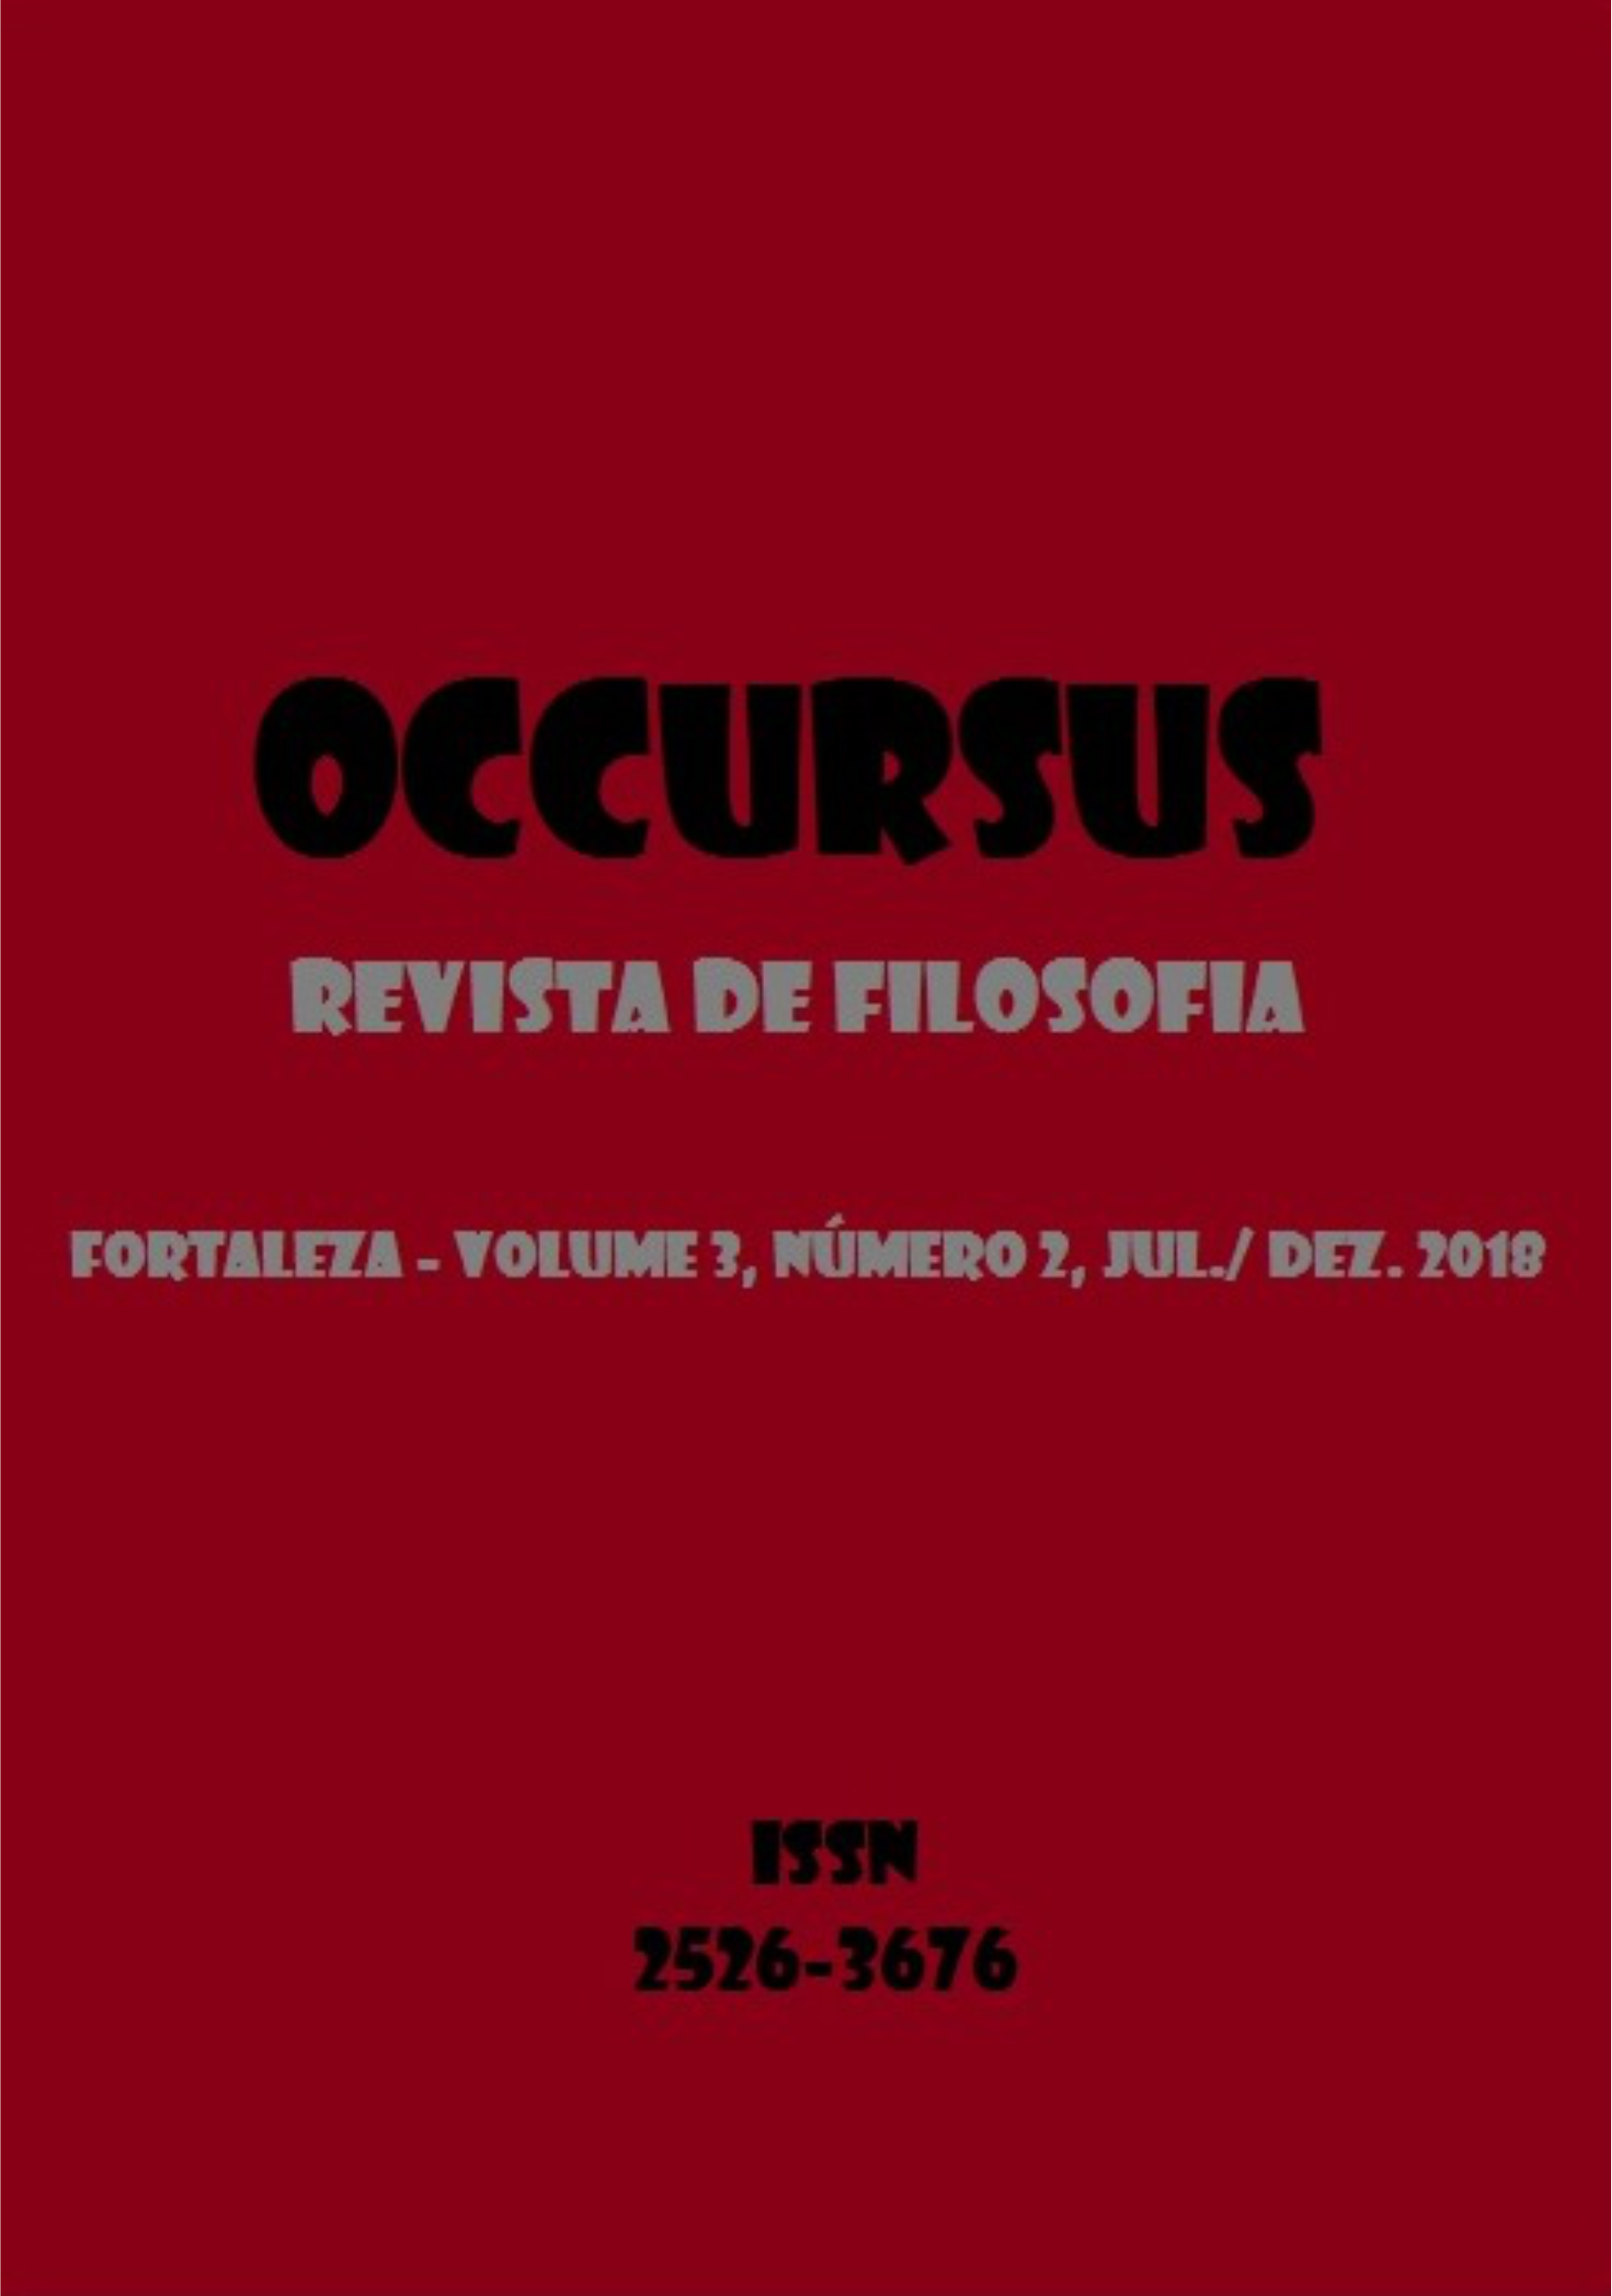 Occursus - Revista de Filosofia - V3N2 - Jul./Dez. 2018